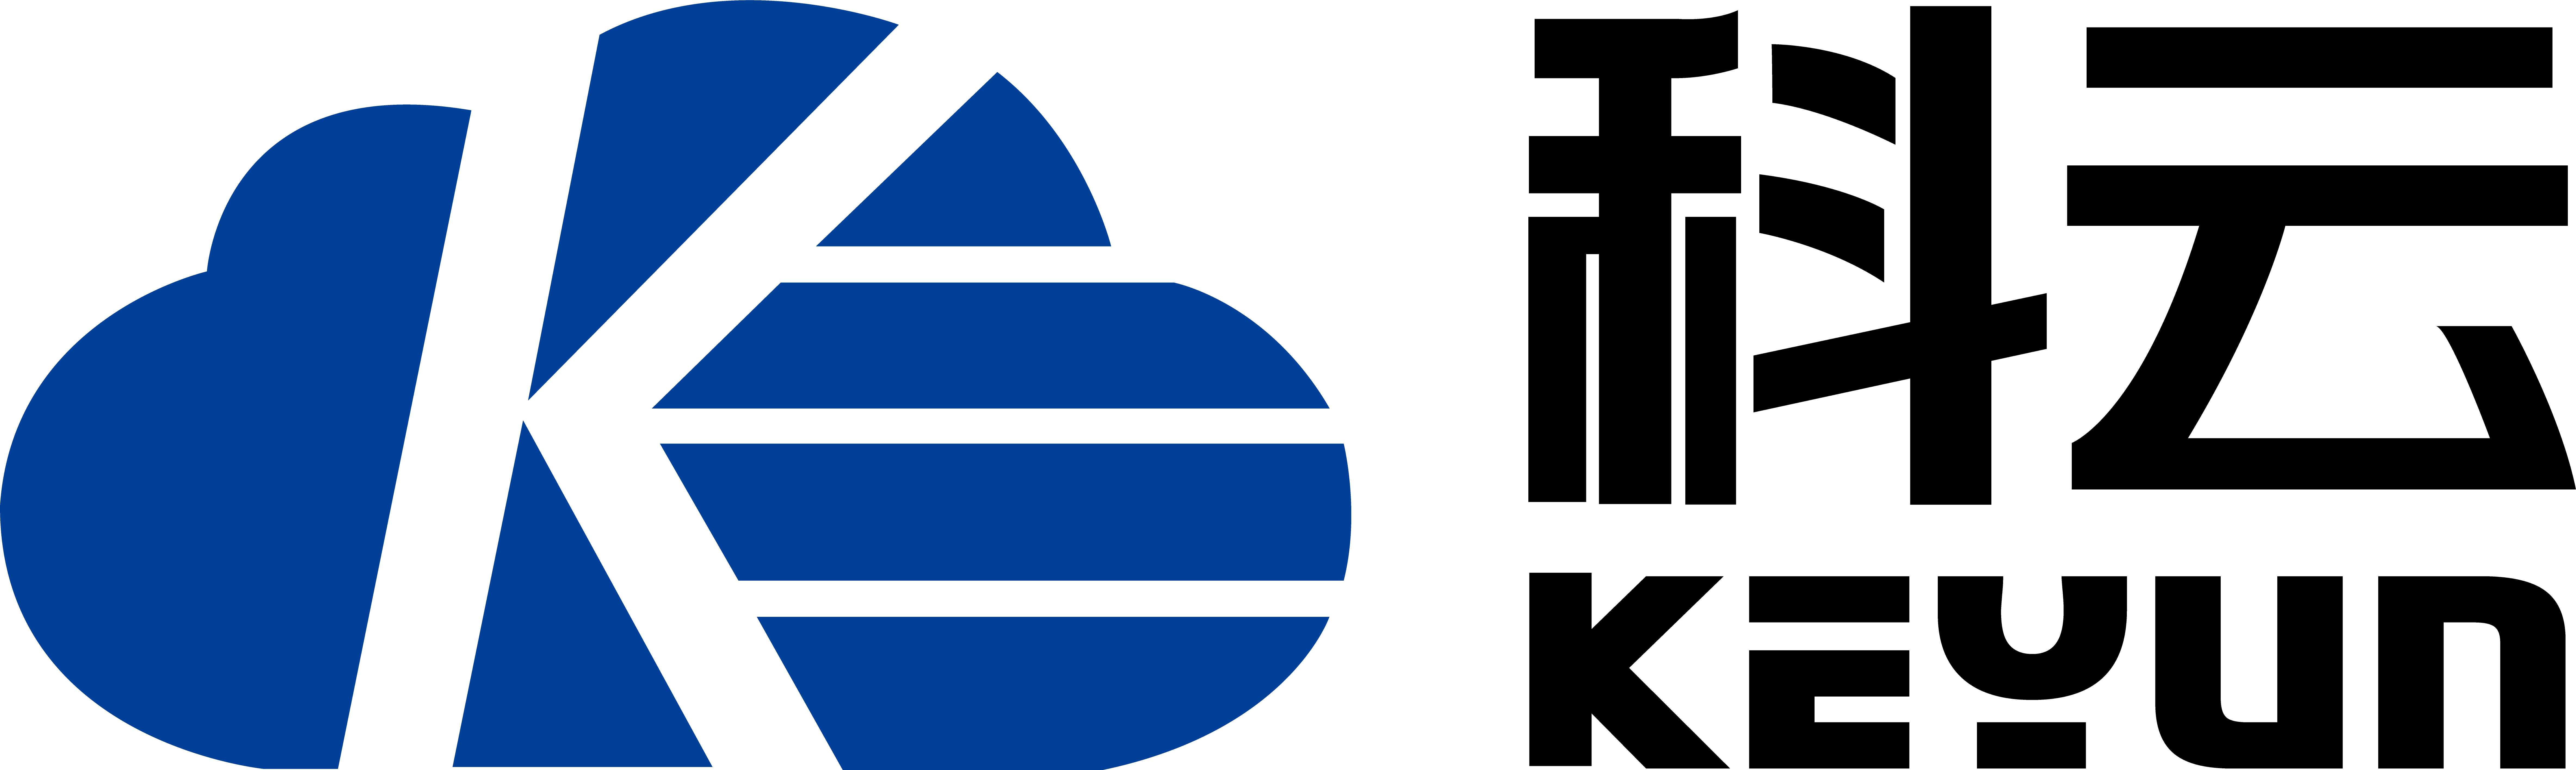 科云logo